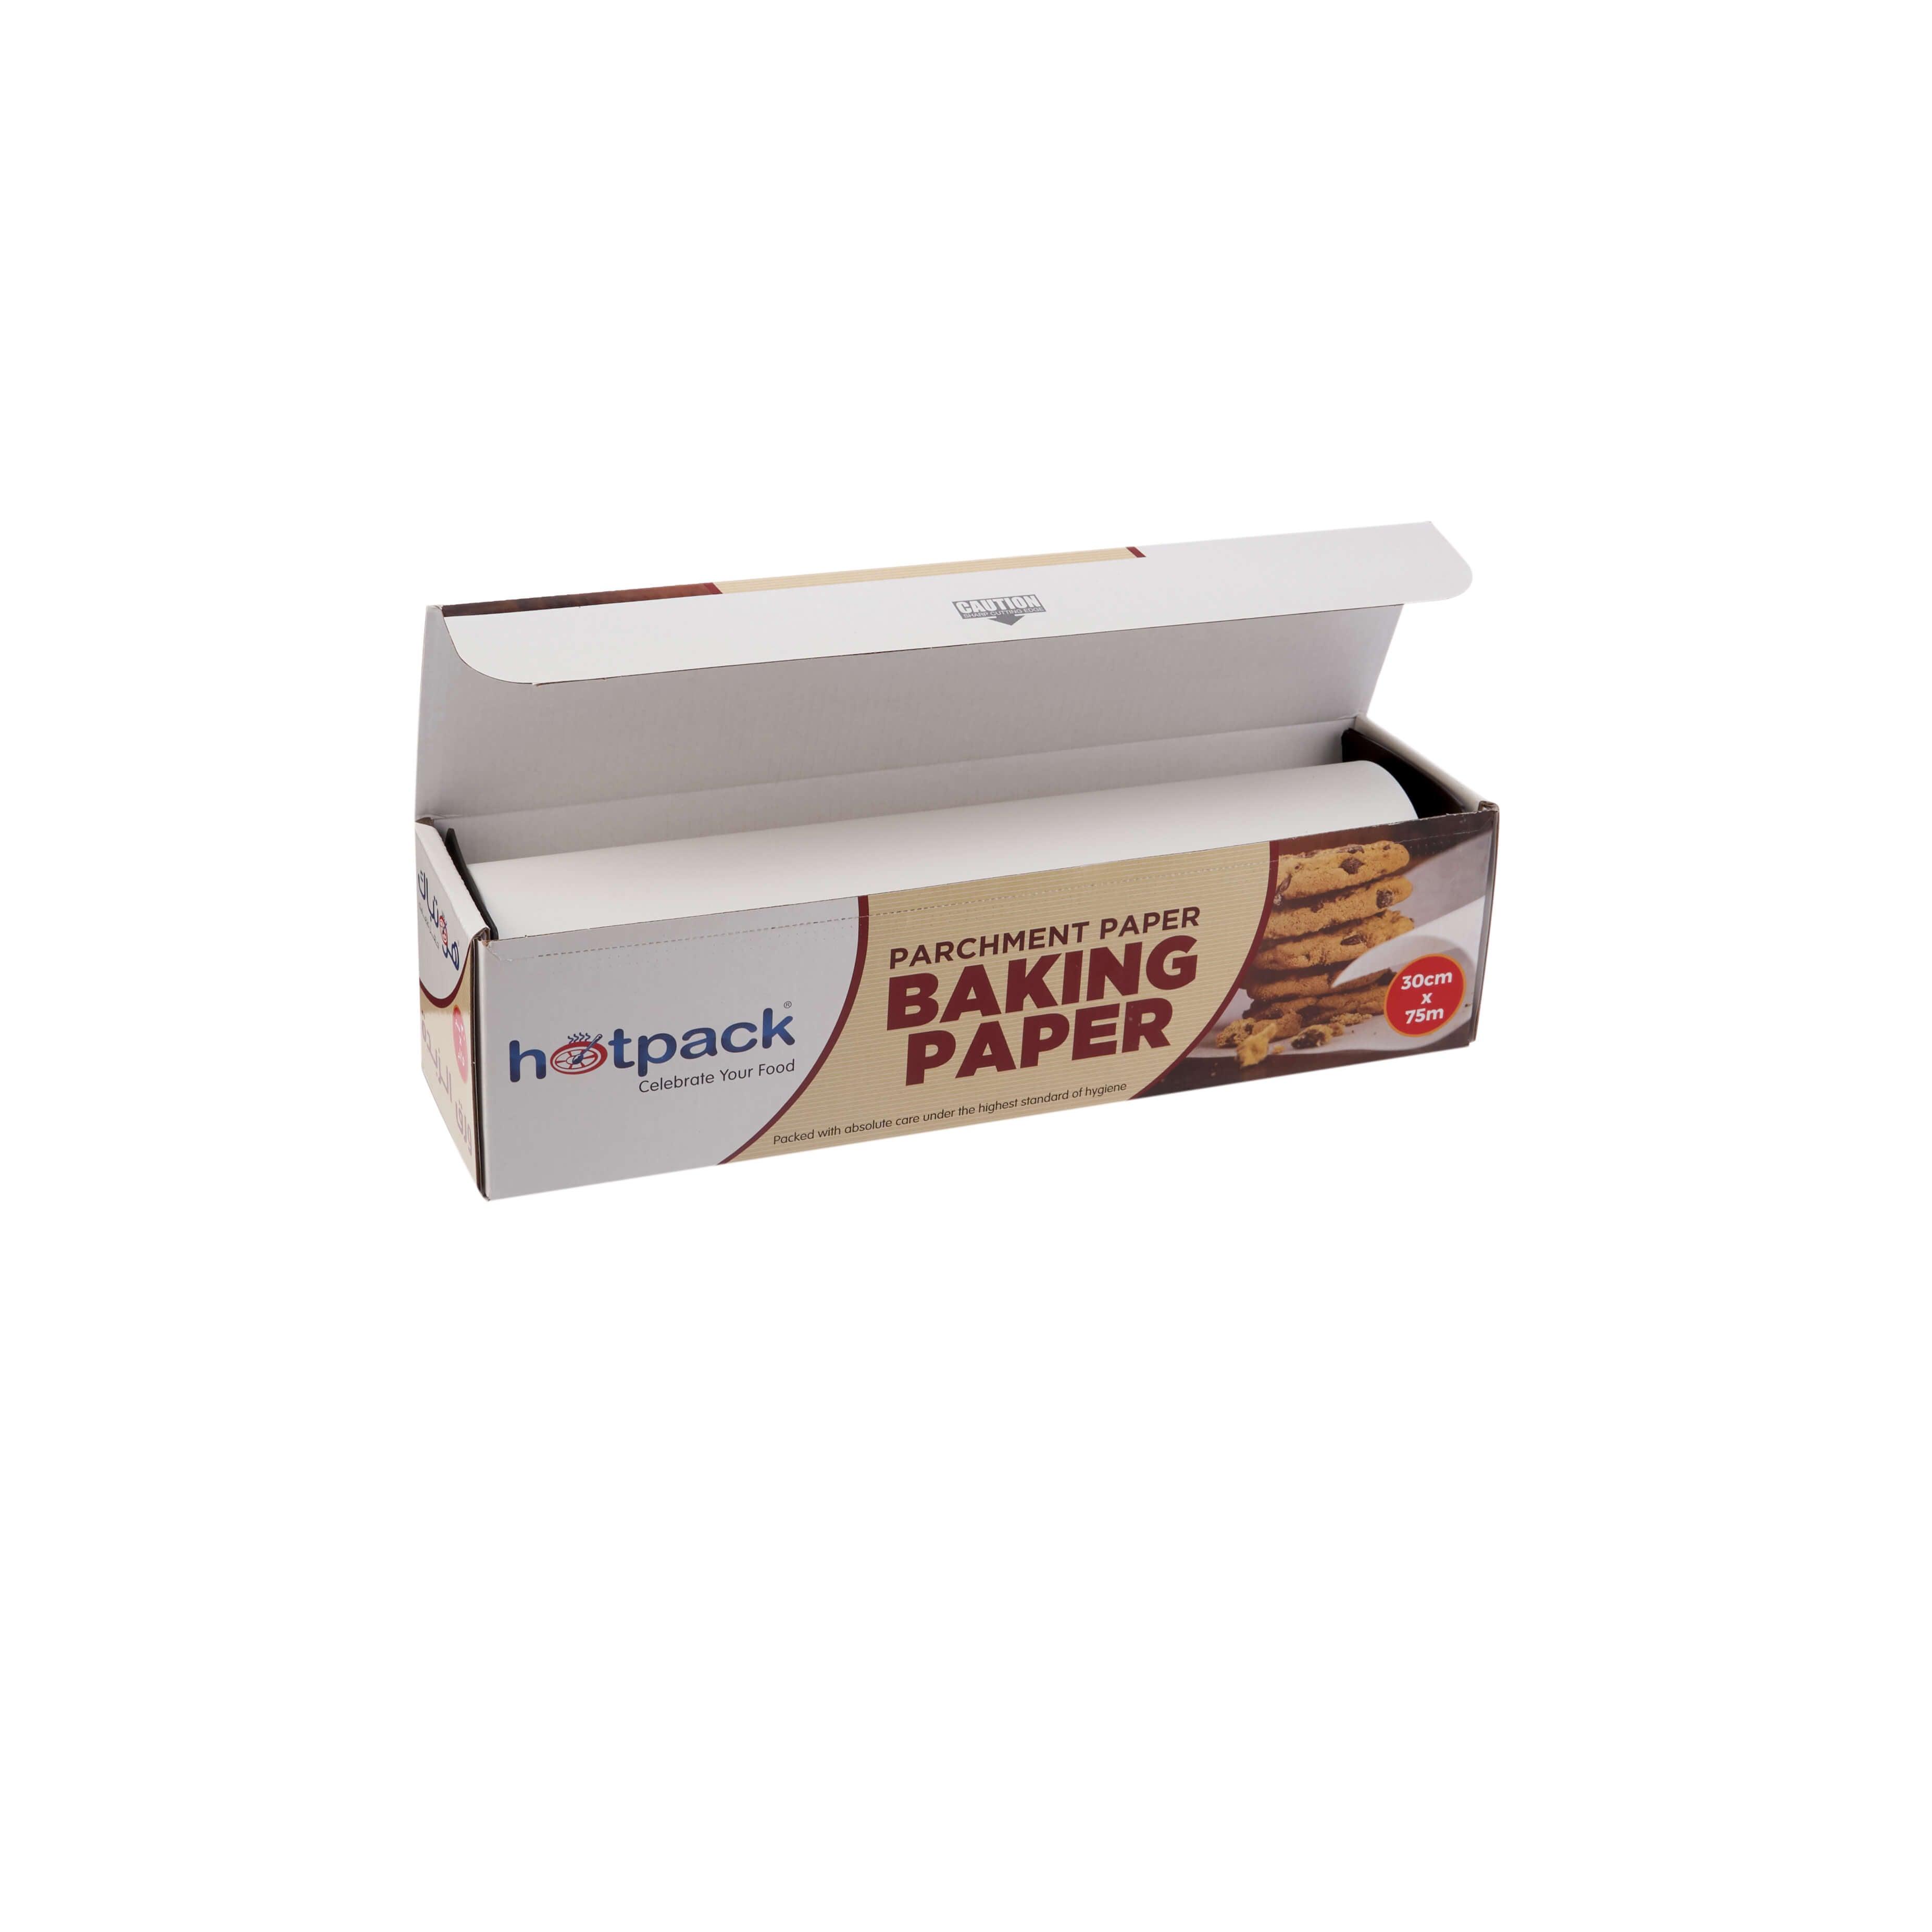 Baking paper roll -Hotpack Global